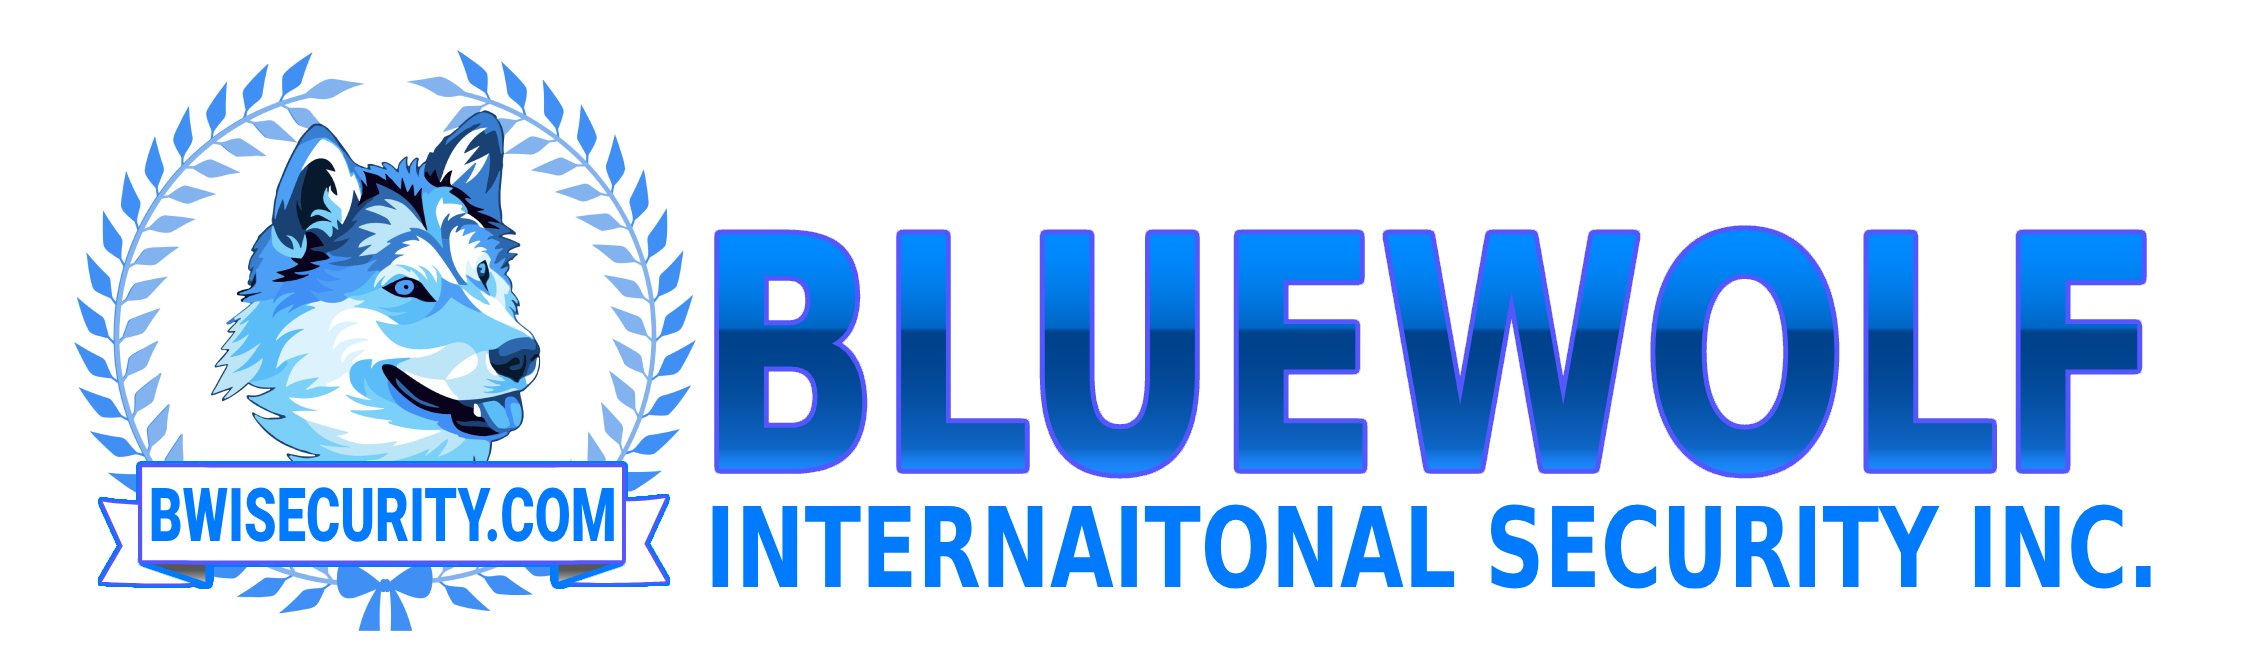 bluewolf international Private security guards service company logo